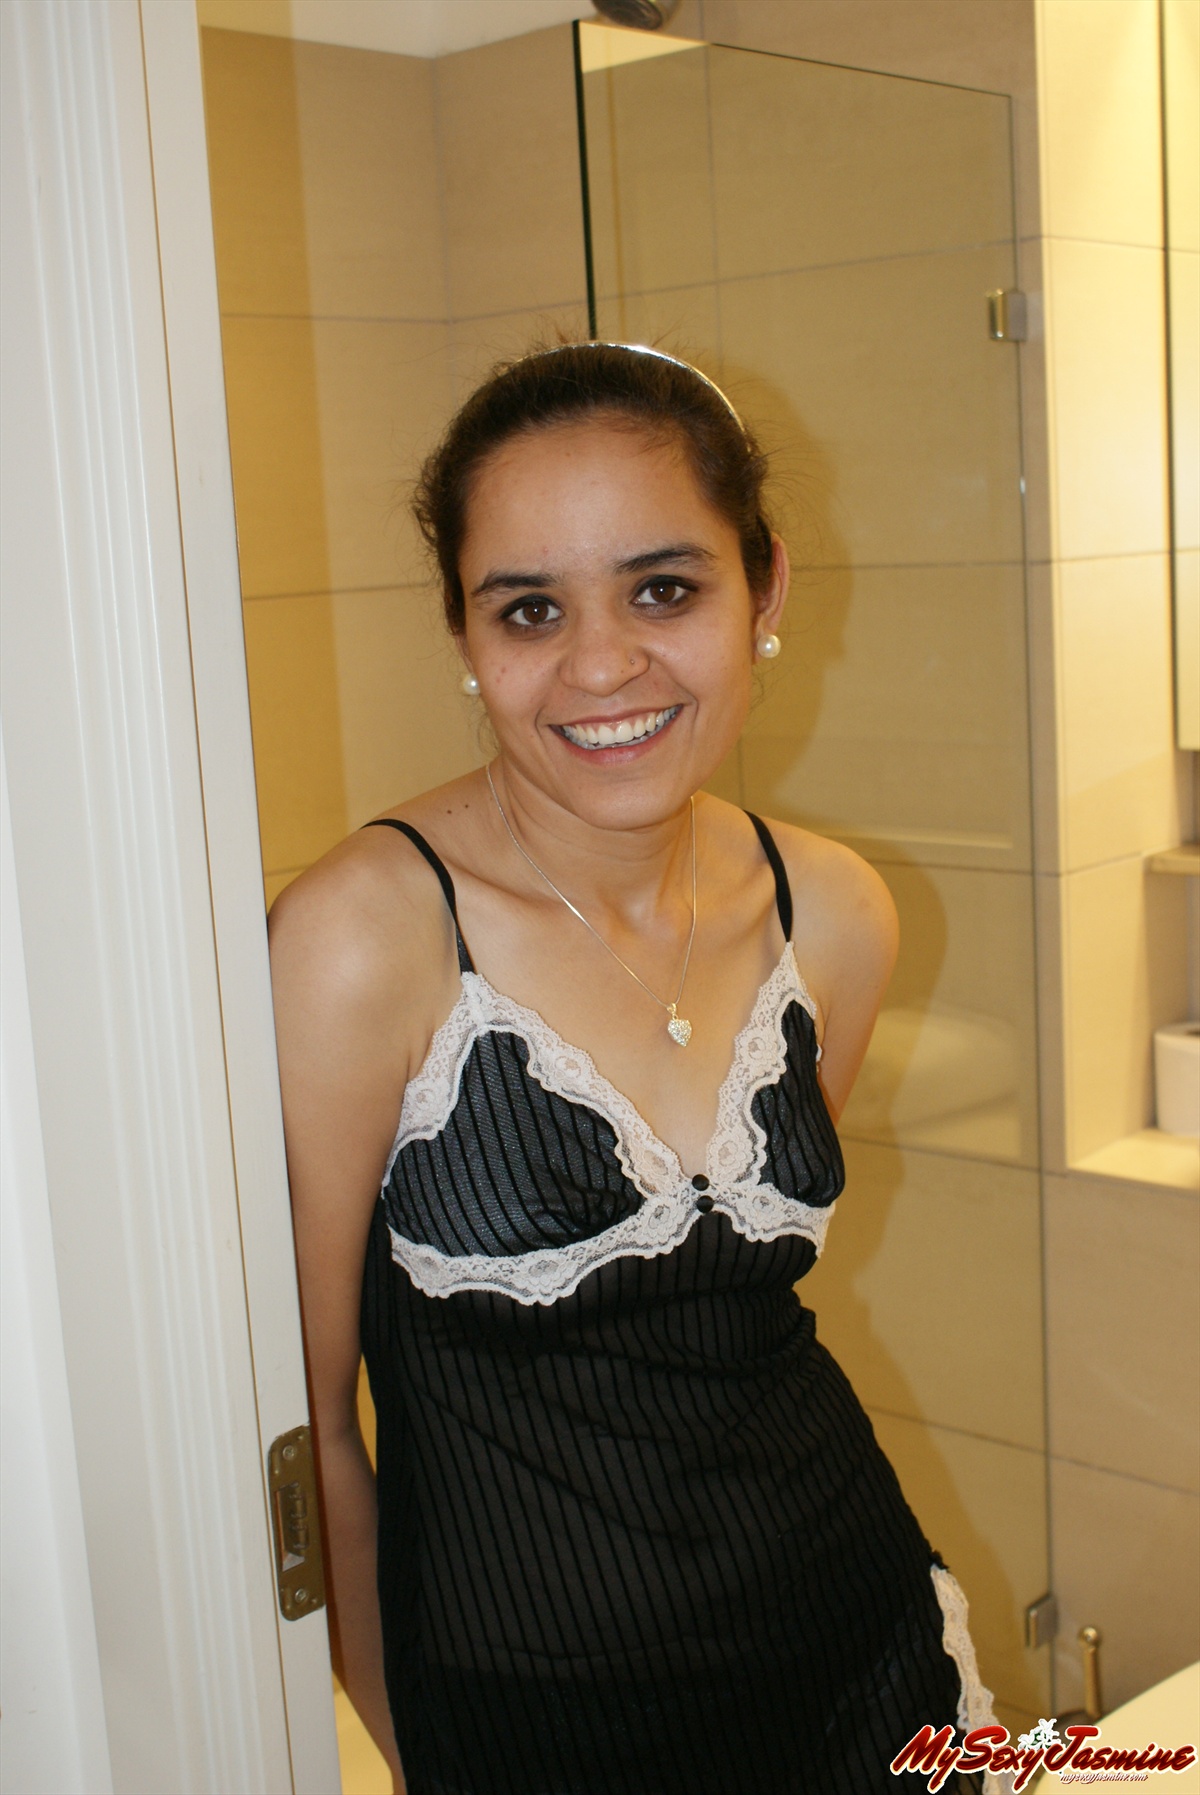 Pic gal 0022 Jasmine in horny black top in shower getting